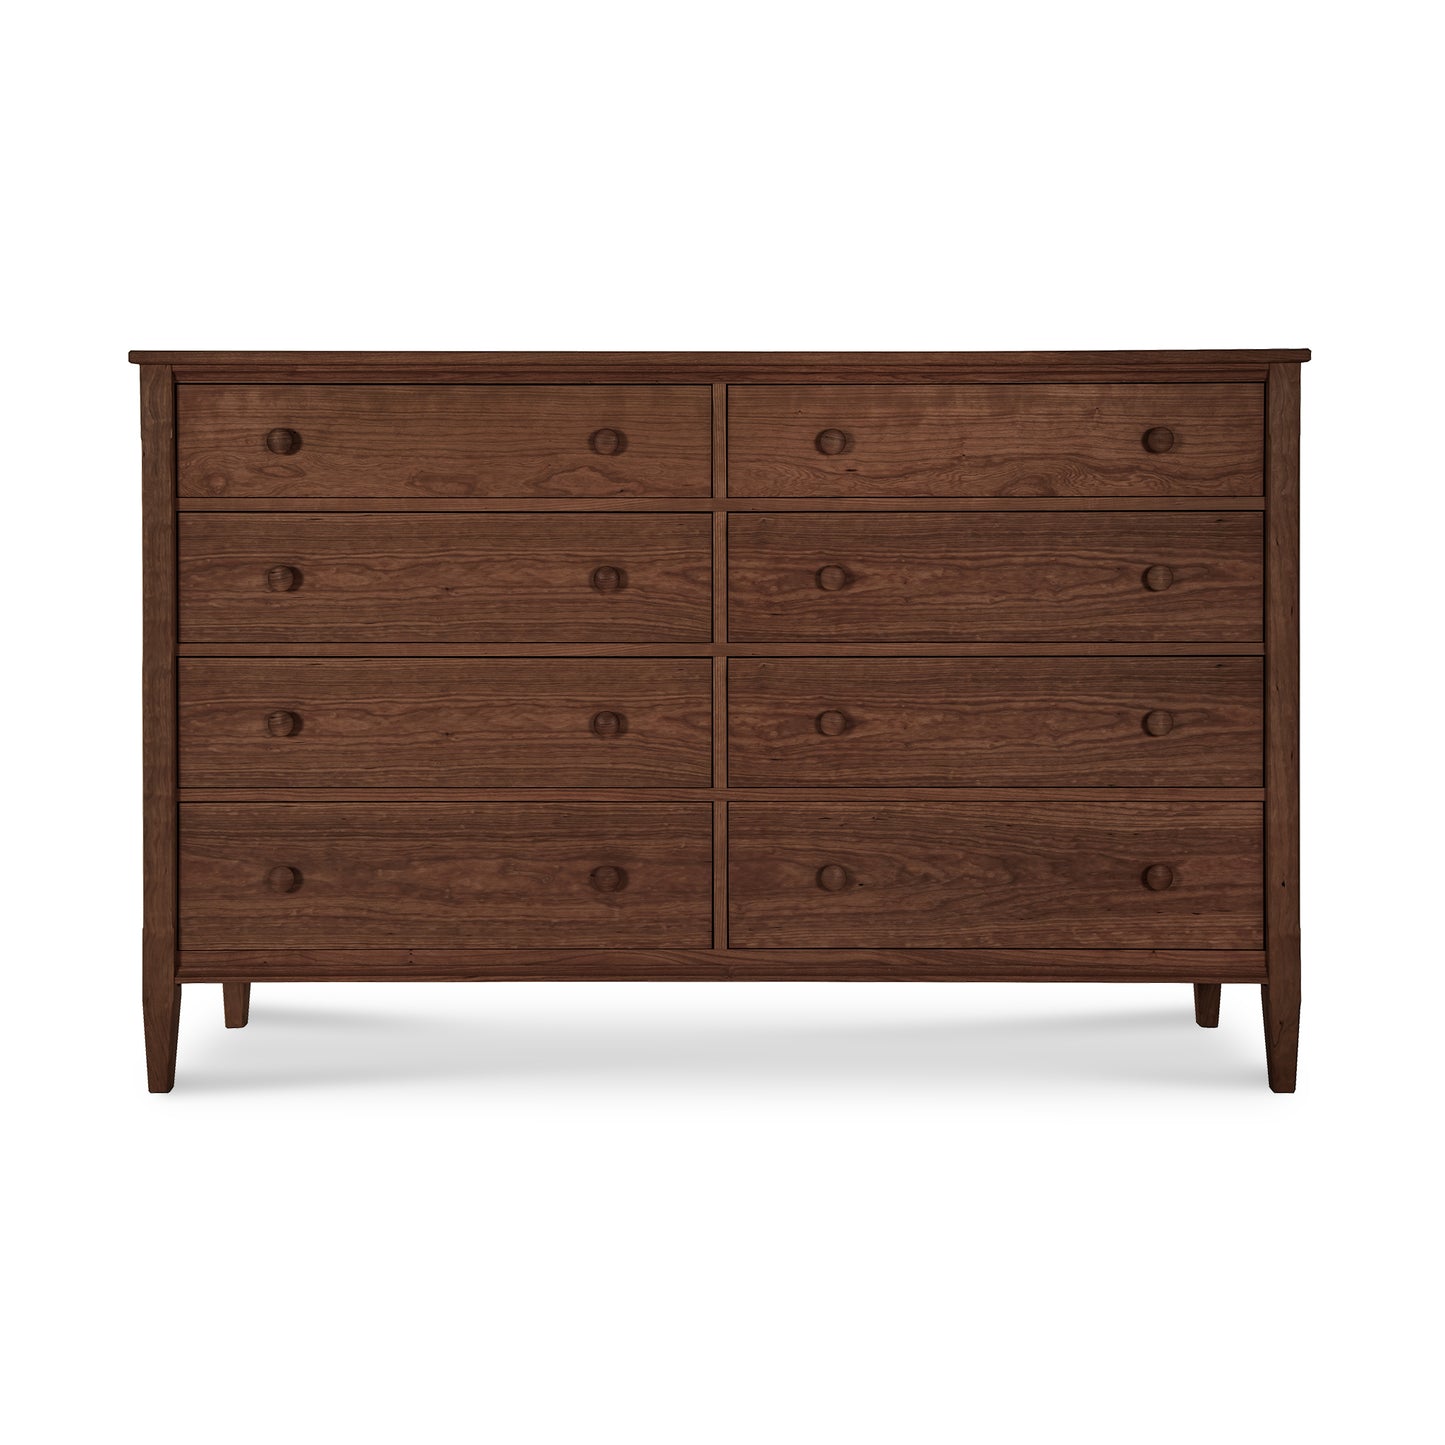 A Maple Corner Woodworks Vermont Shaker 8-Drawer Dresser, perfect for bedroom furniture.